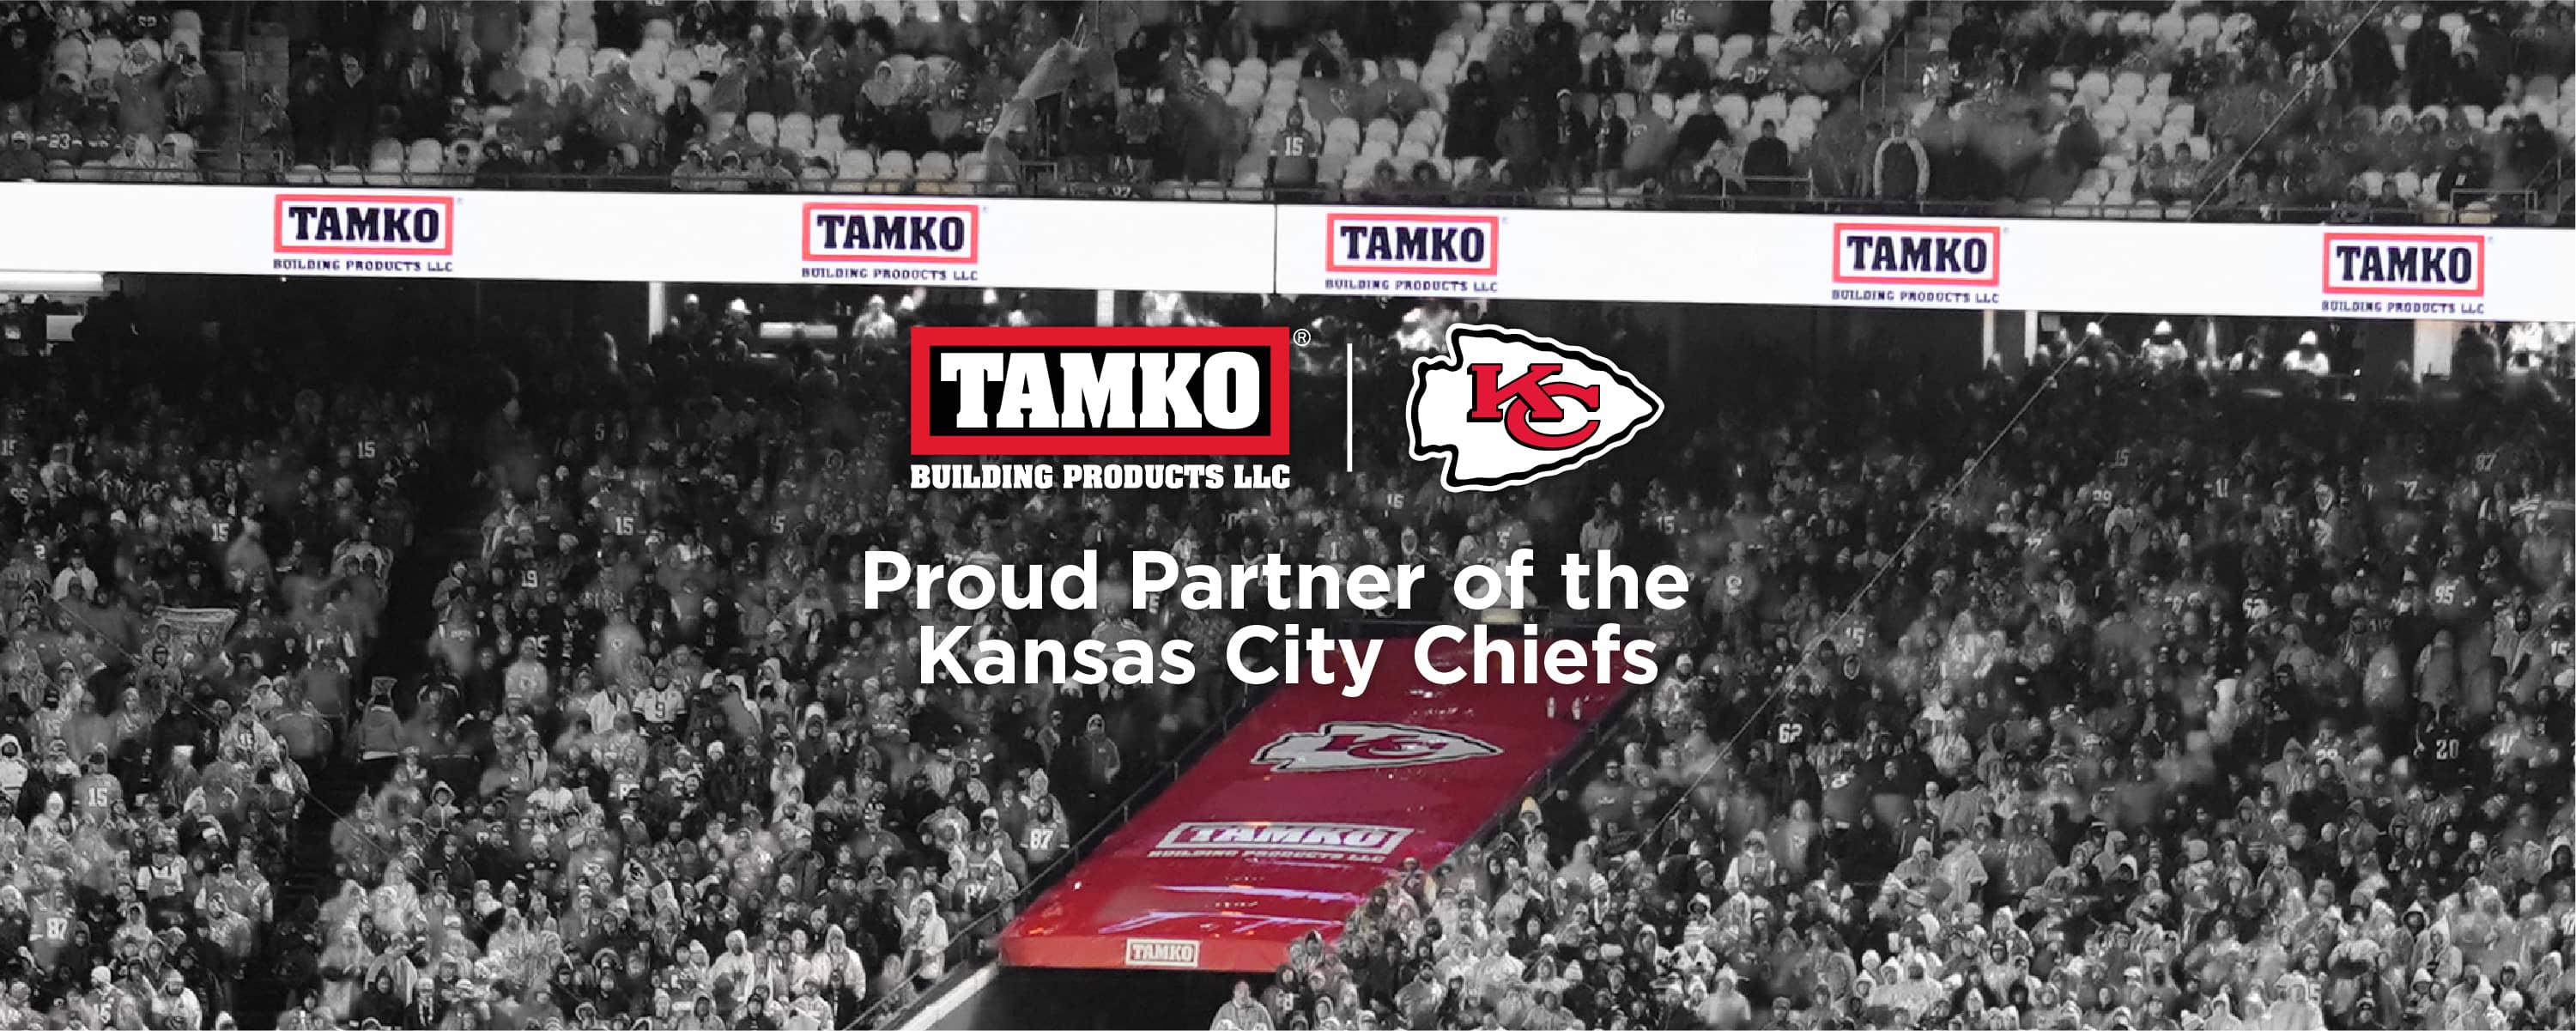 TAMKO - Proud Partner of the Kansas City Chiefs